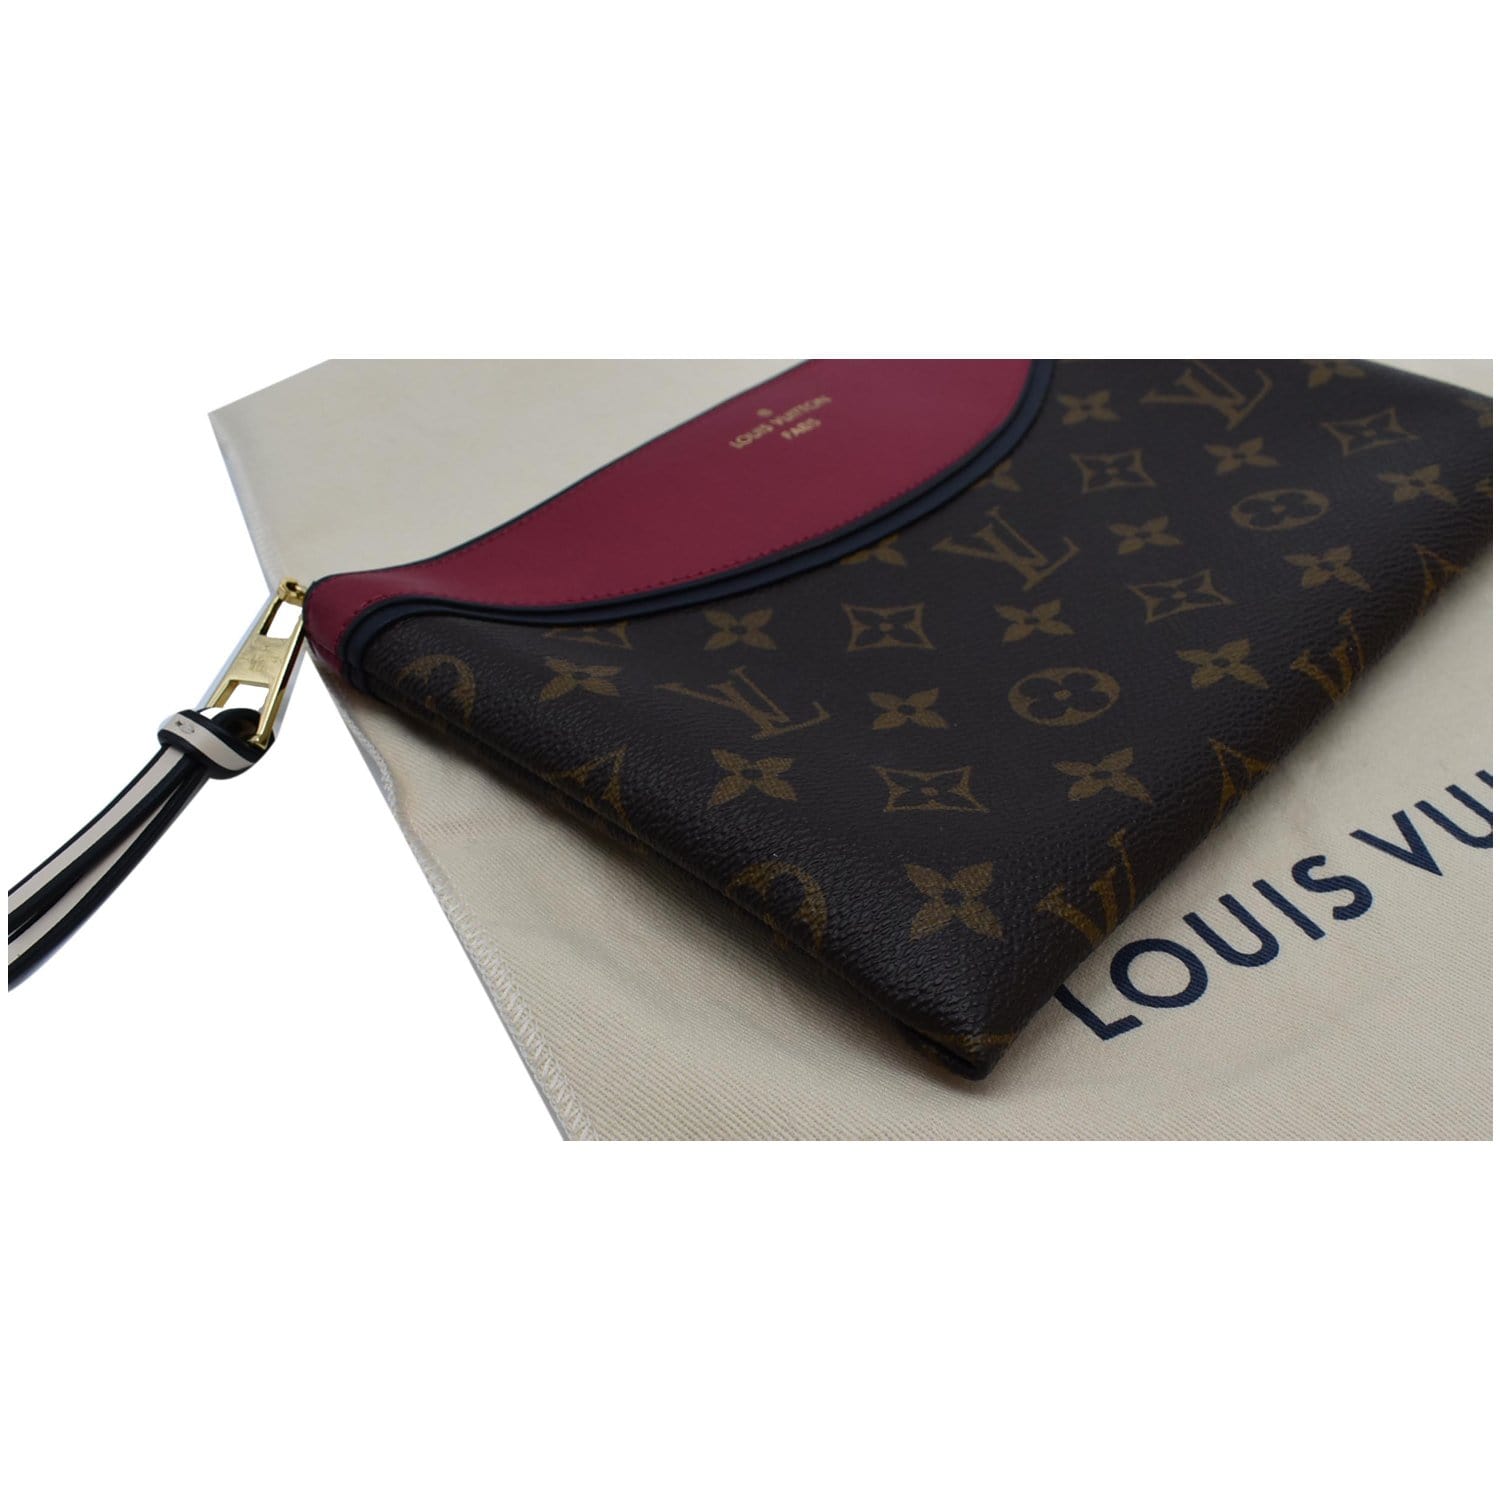 LOUIS VUITTON Tuileries monogram bag unboxing #louisvuitton